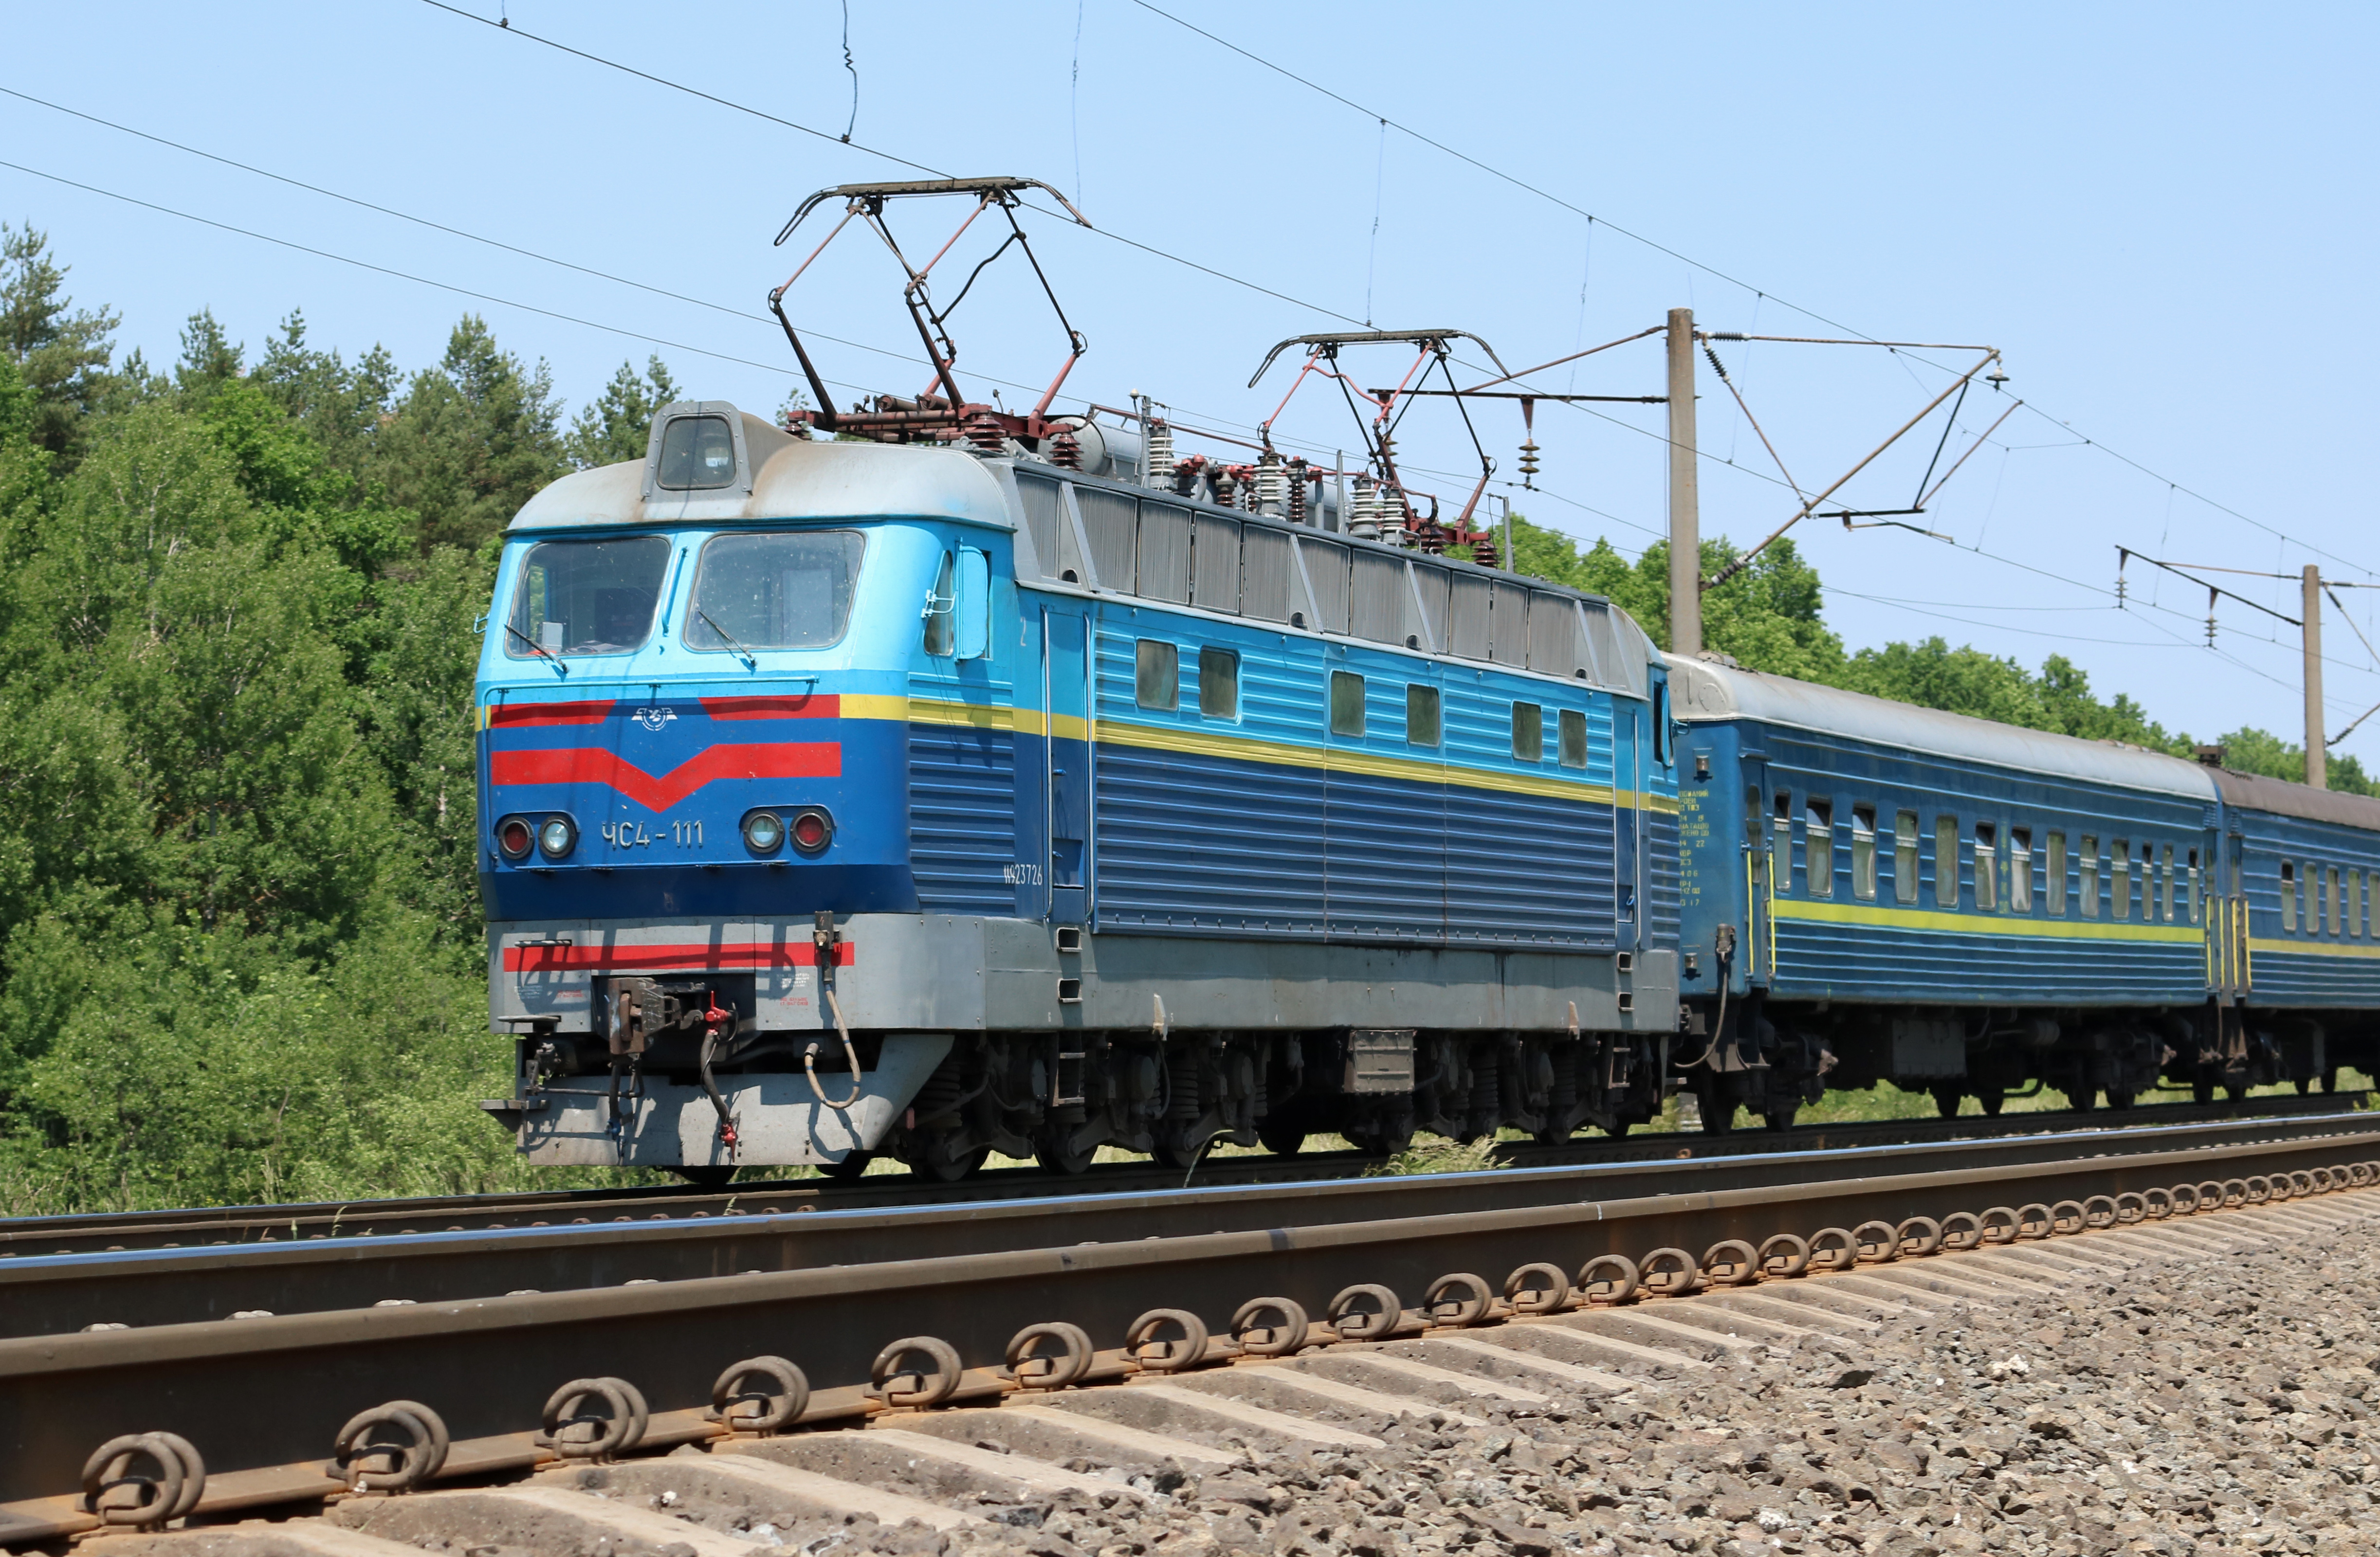 Locomotive ChS4-111 2017 G1